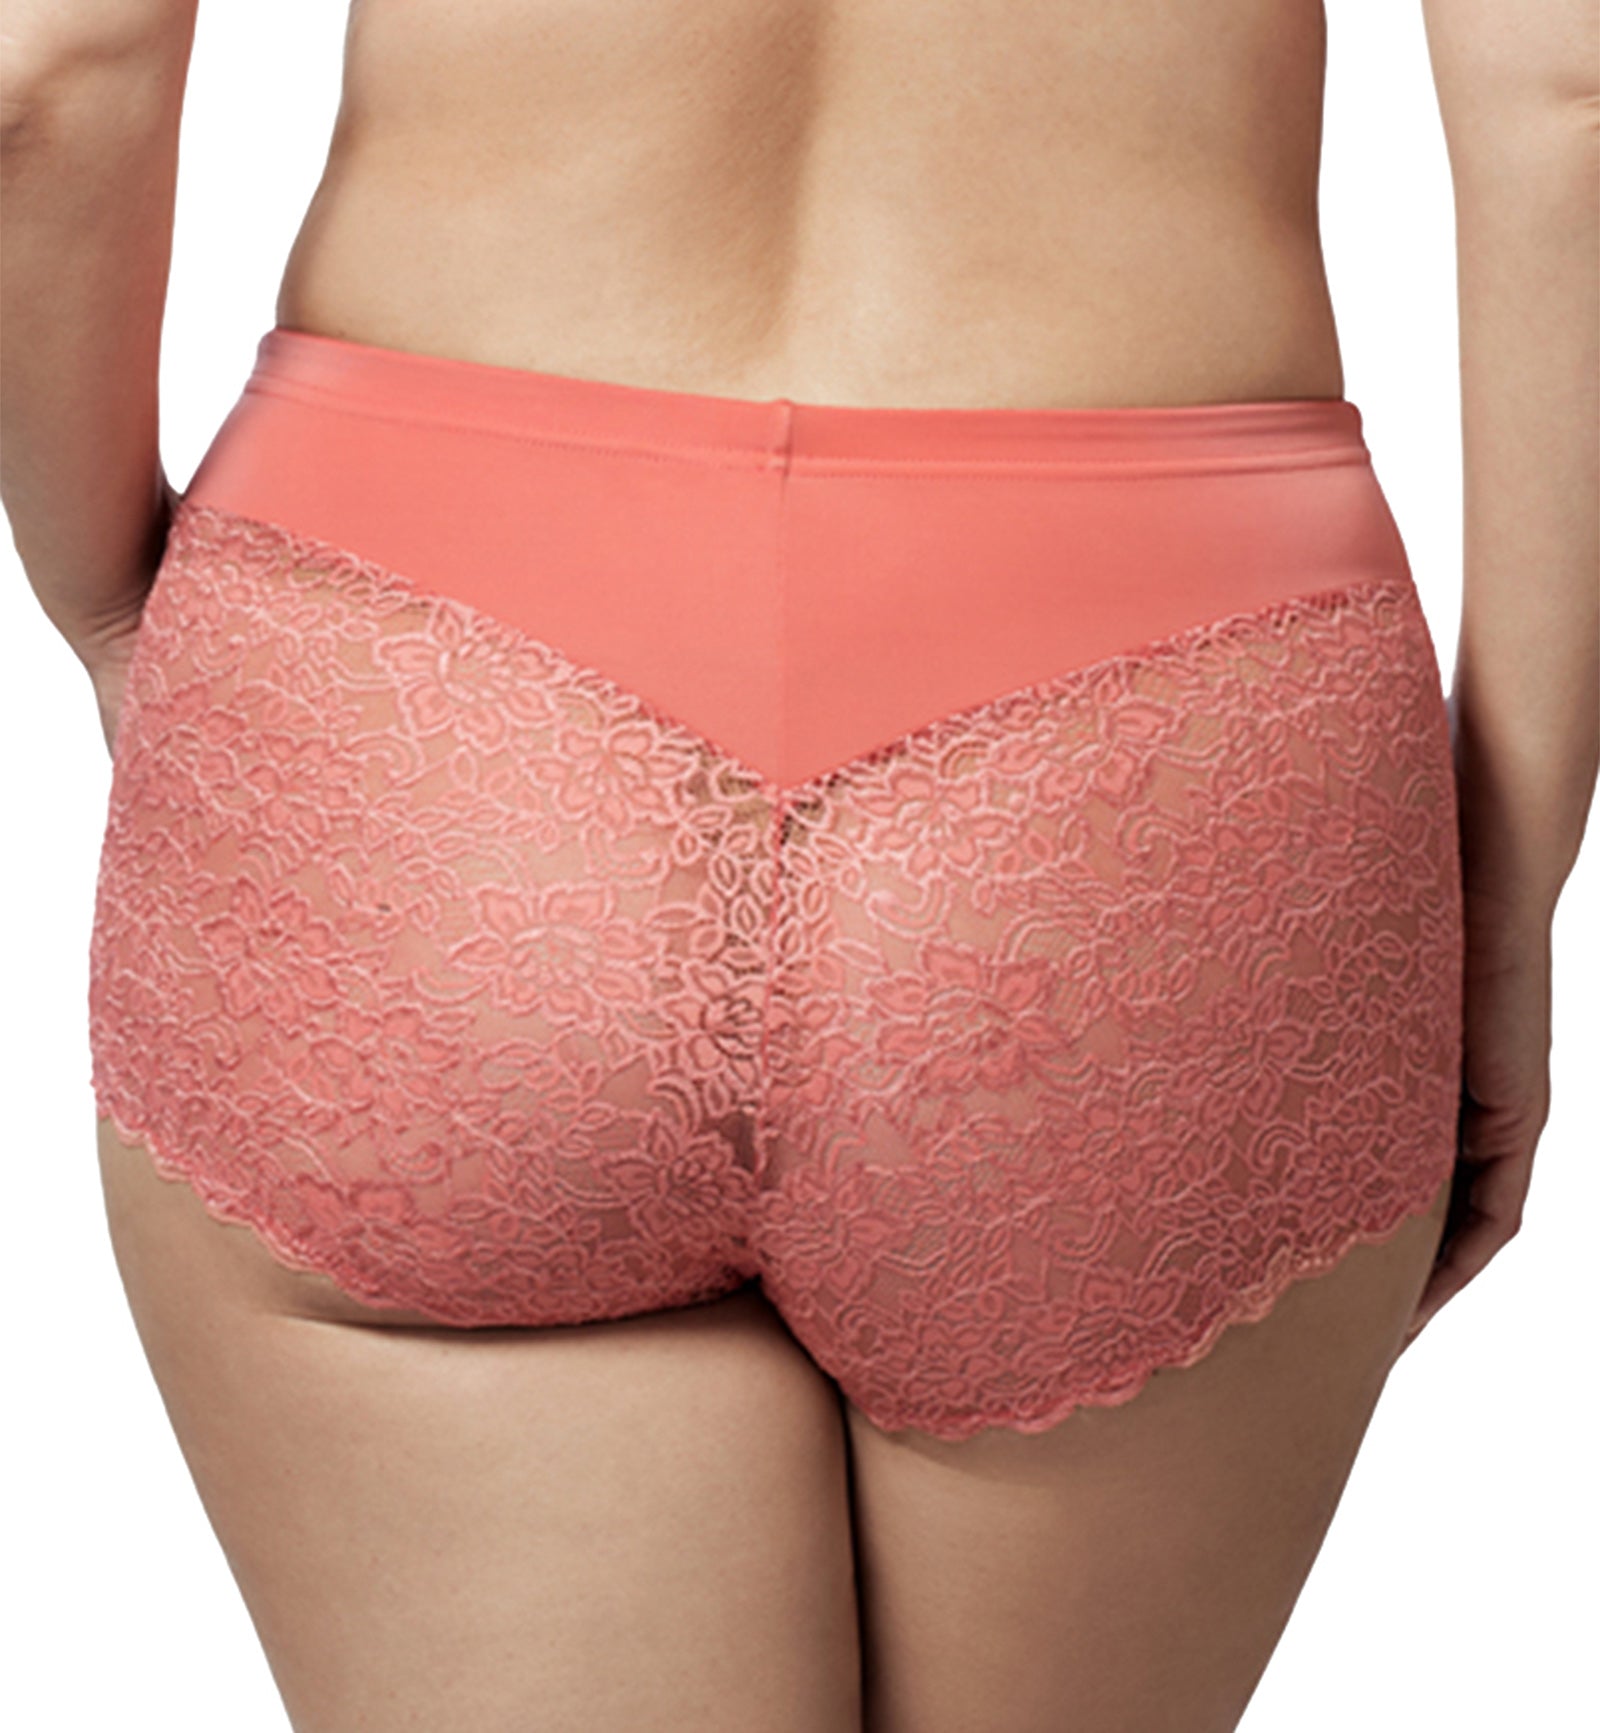 Elila Stretch Lace Cheeky Full Panty (3311),Medium,Coral - Coral,Medium